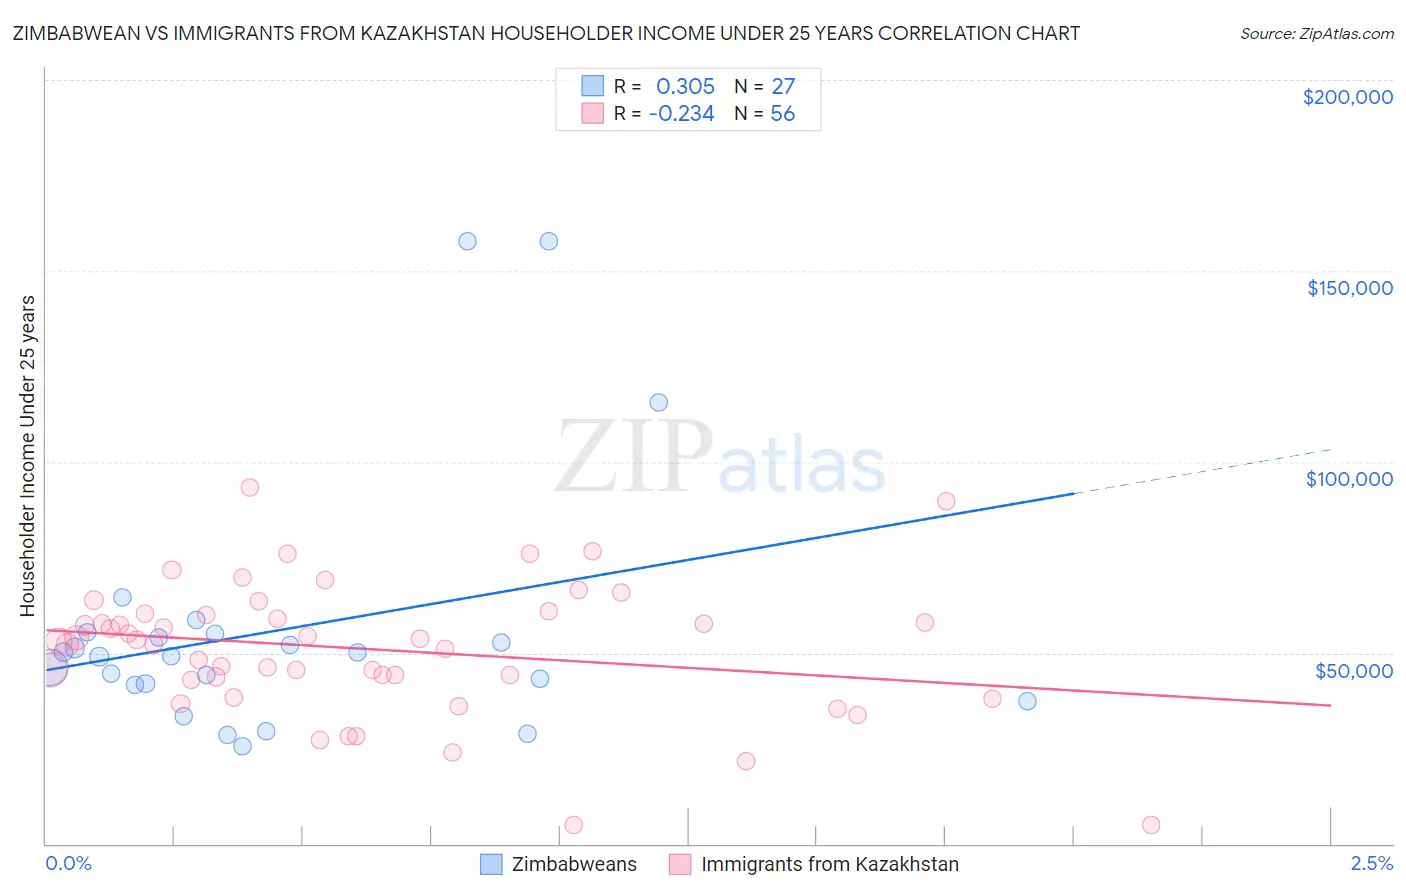 Zimbabwean vs Immigrants from Kazakhstan Householder Income Under 25 years